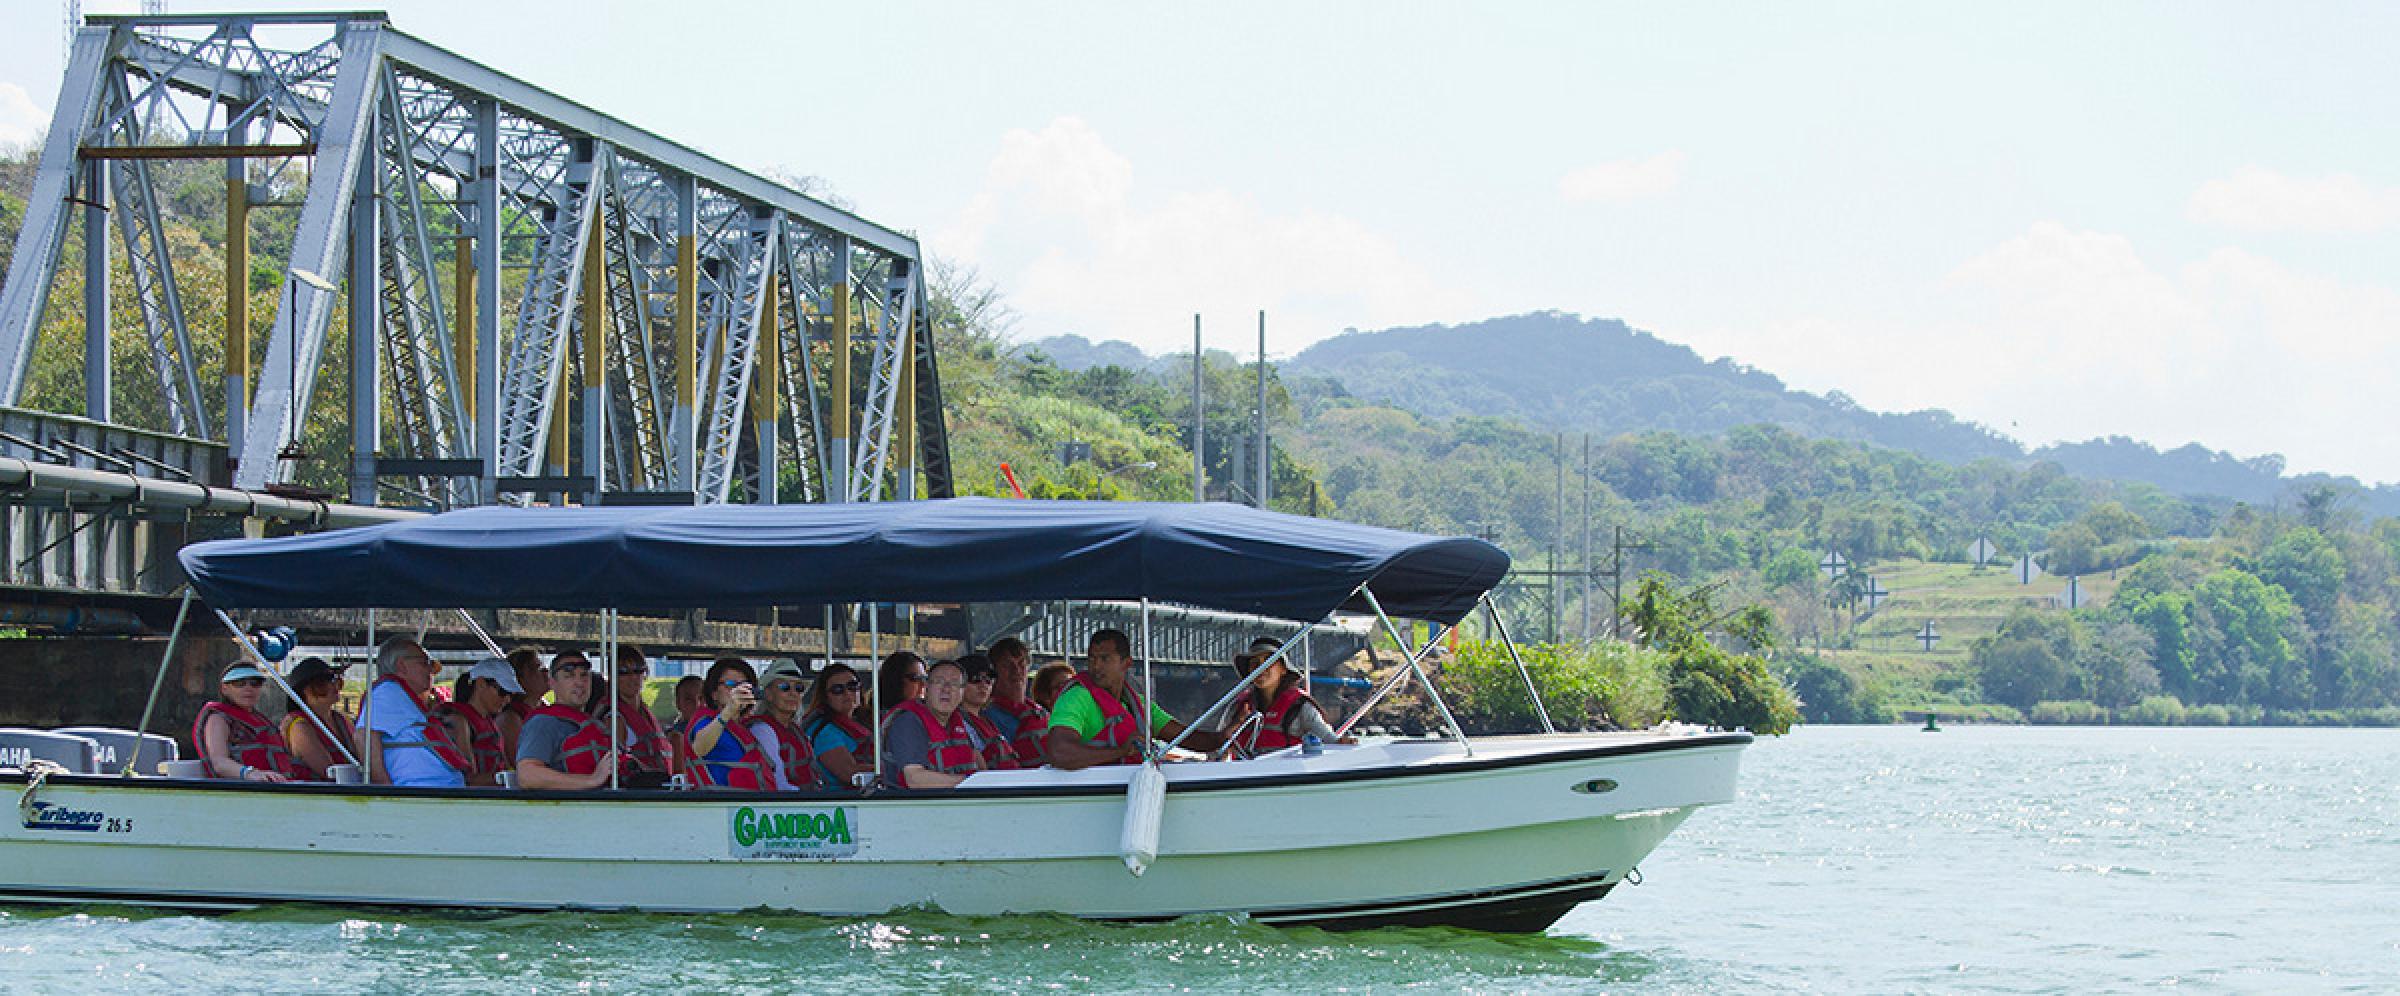 gatun lake boat tour